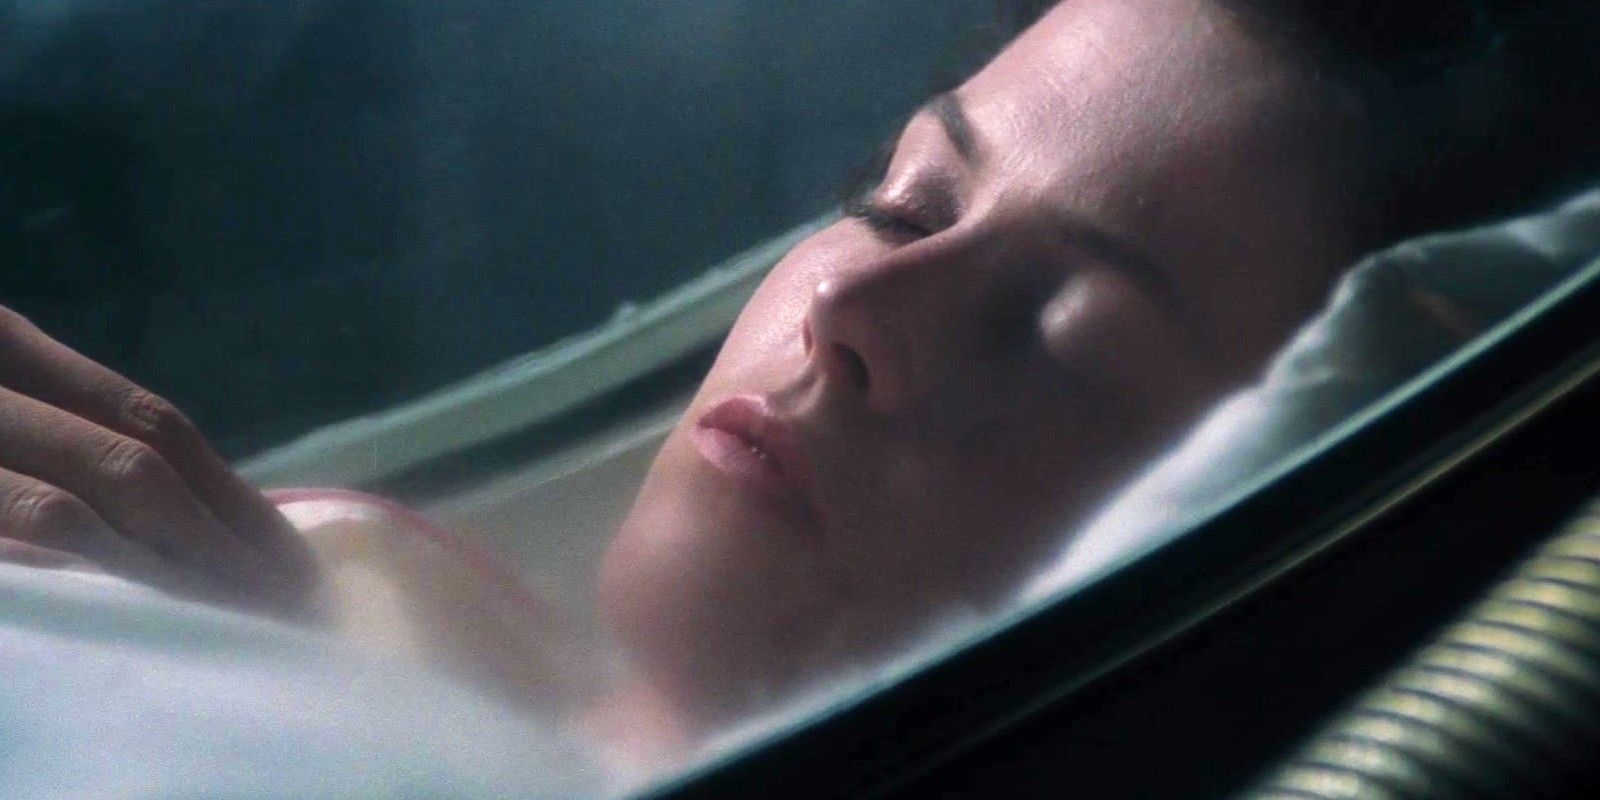 Ellen Ripley (Sigourney Weaver) in stasis at the end of Alien